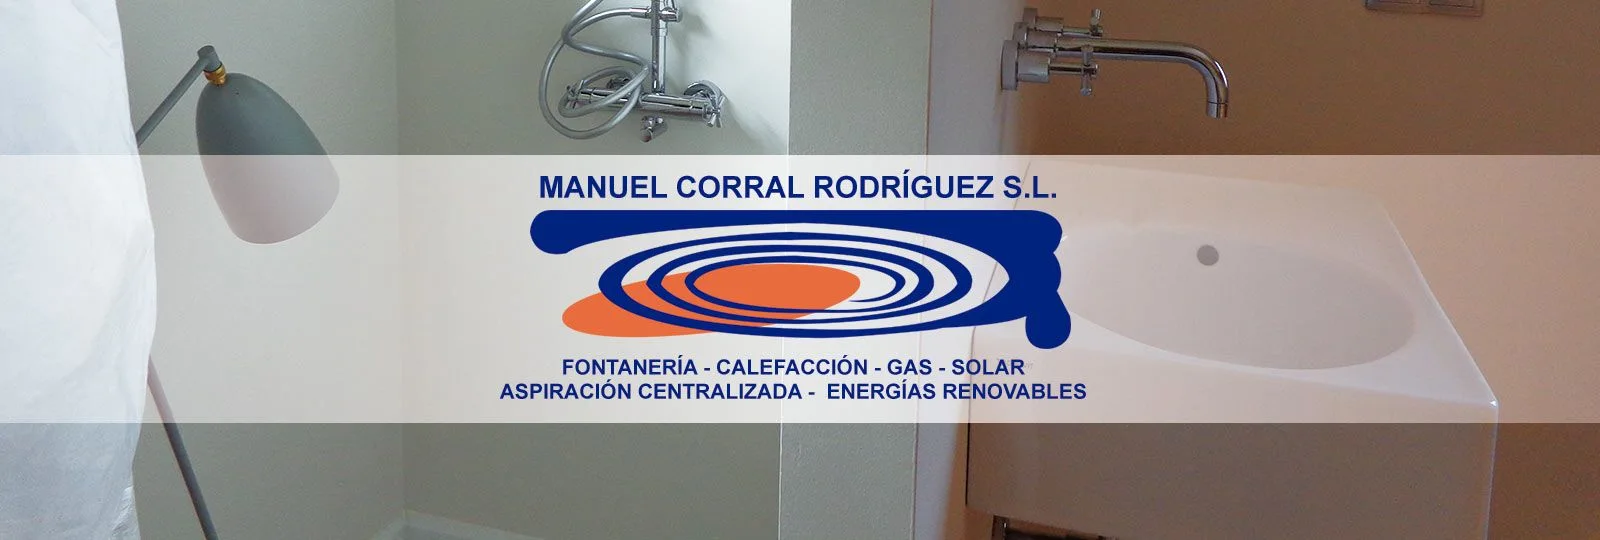 Manuel Corral Rodriguez Logotipo